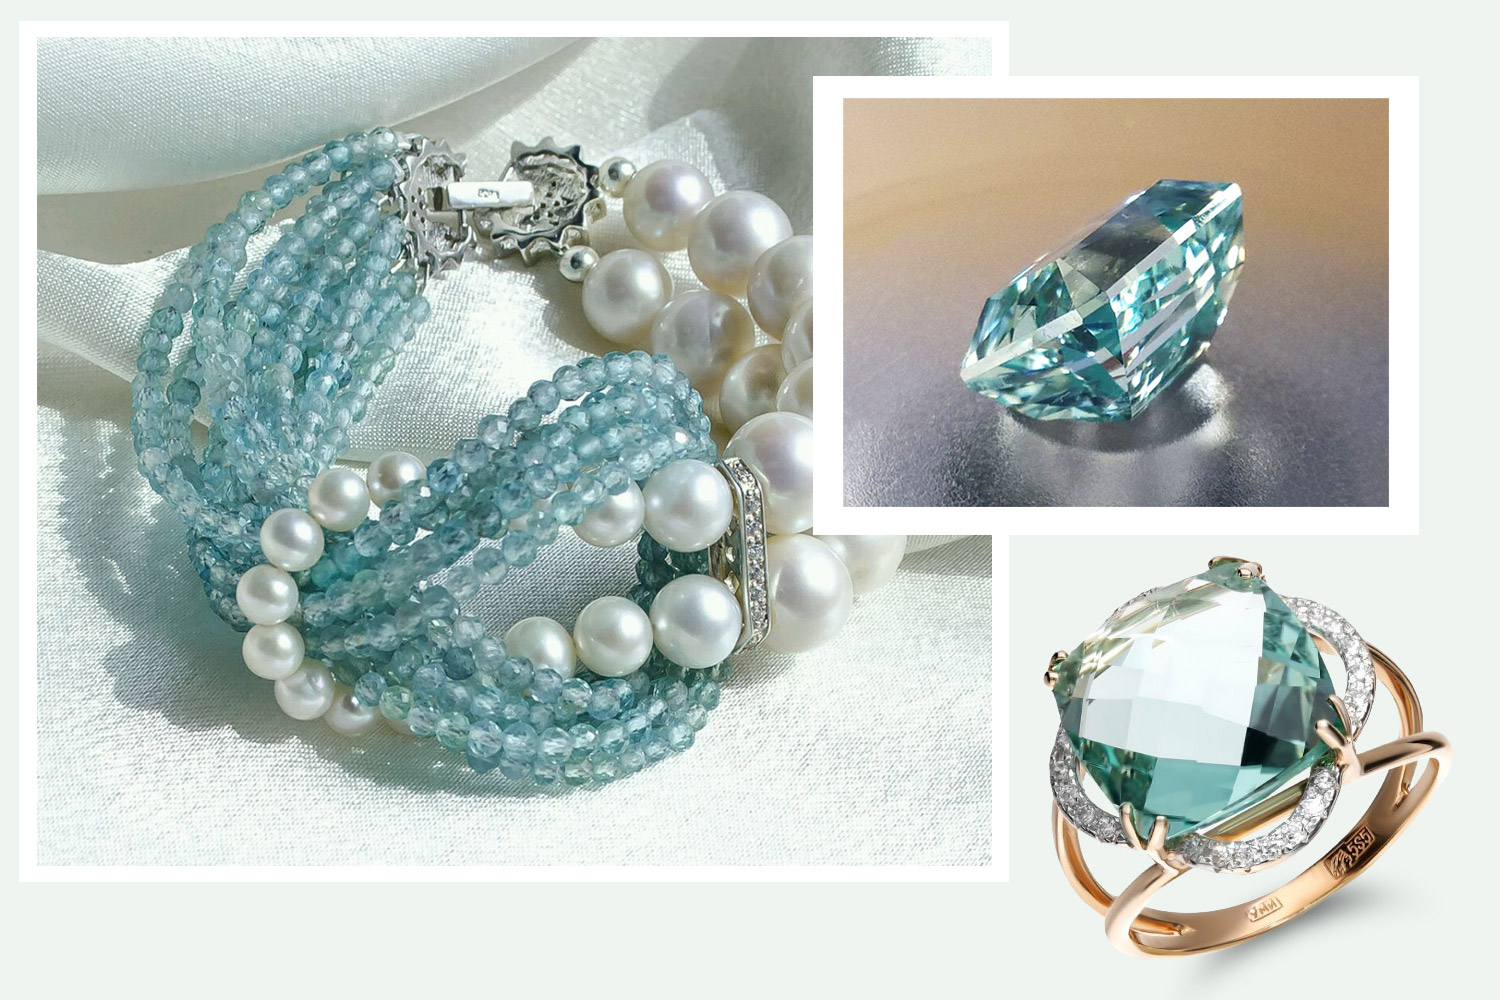 Jewellery with aquamarine